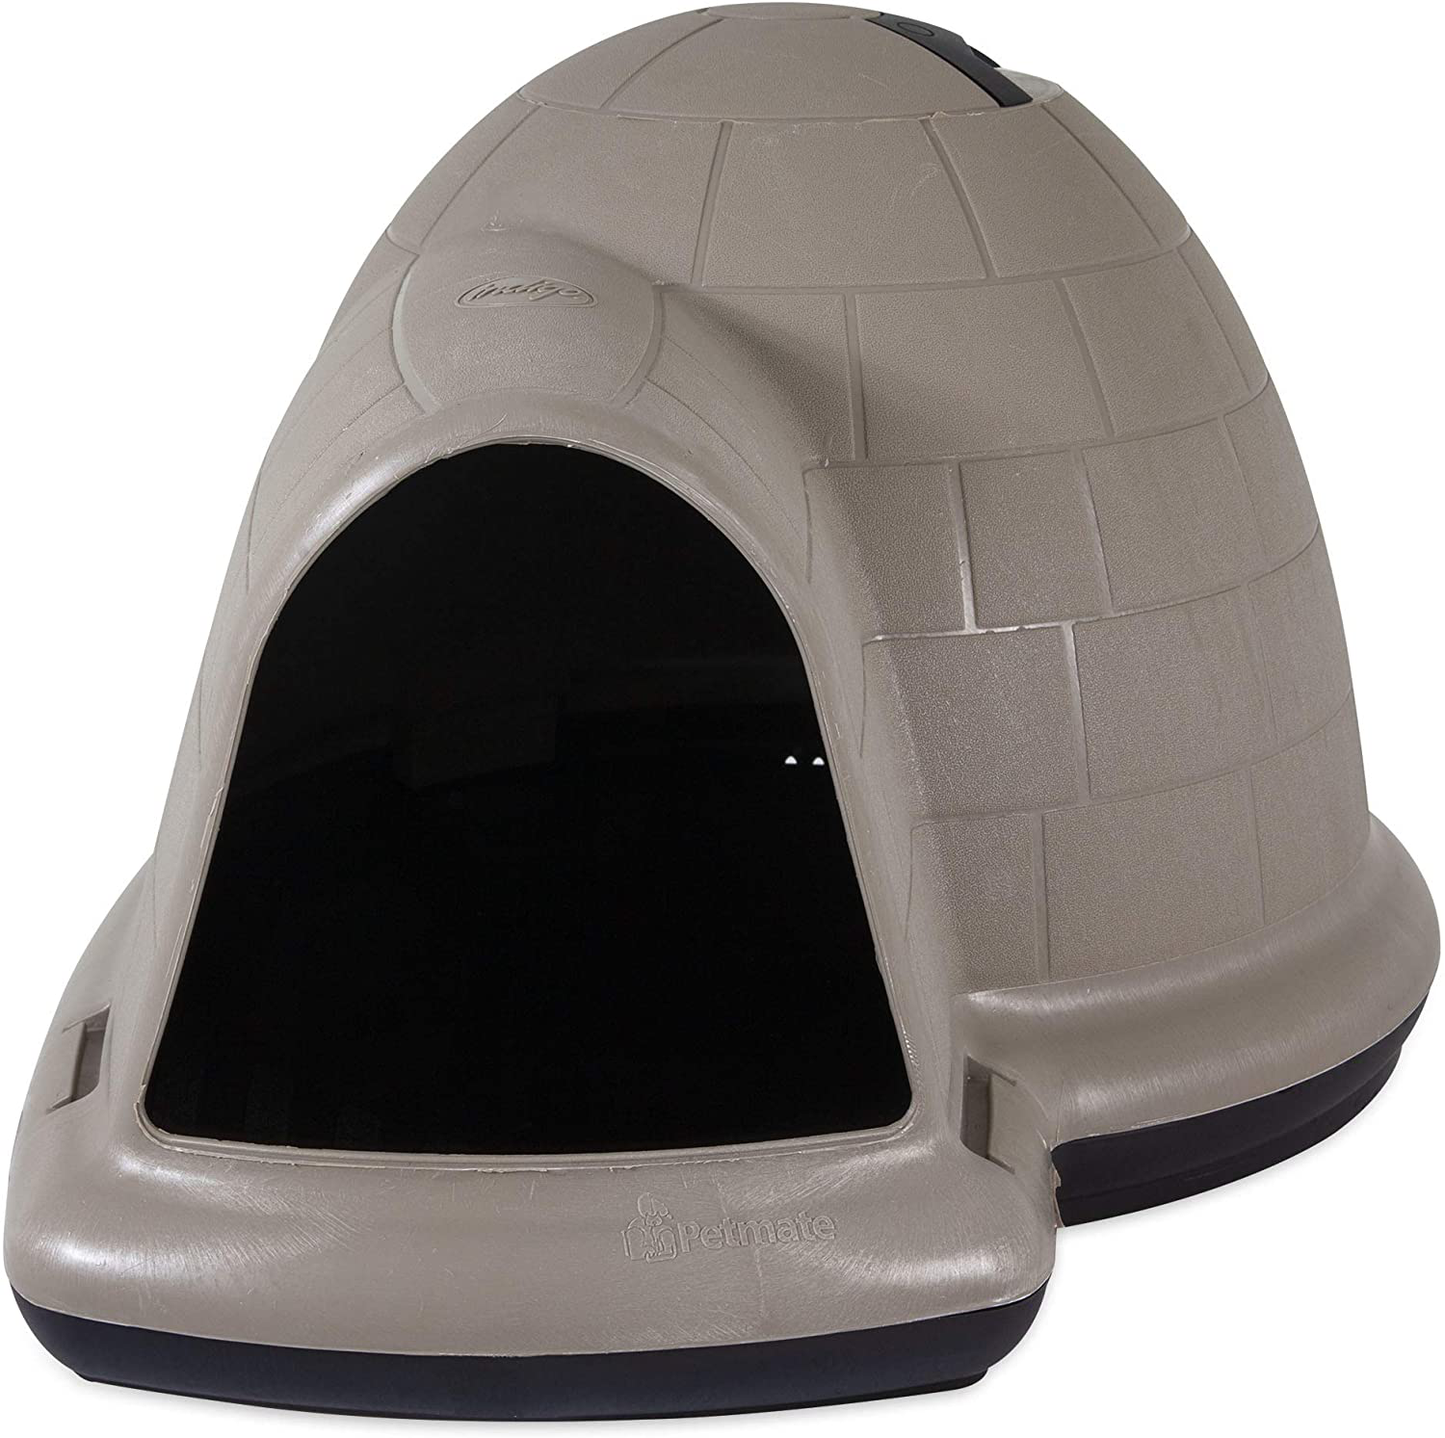 Petmate Indigo Dog House All-Weather Protection Taupe/Black 3 Sizes Available